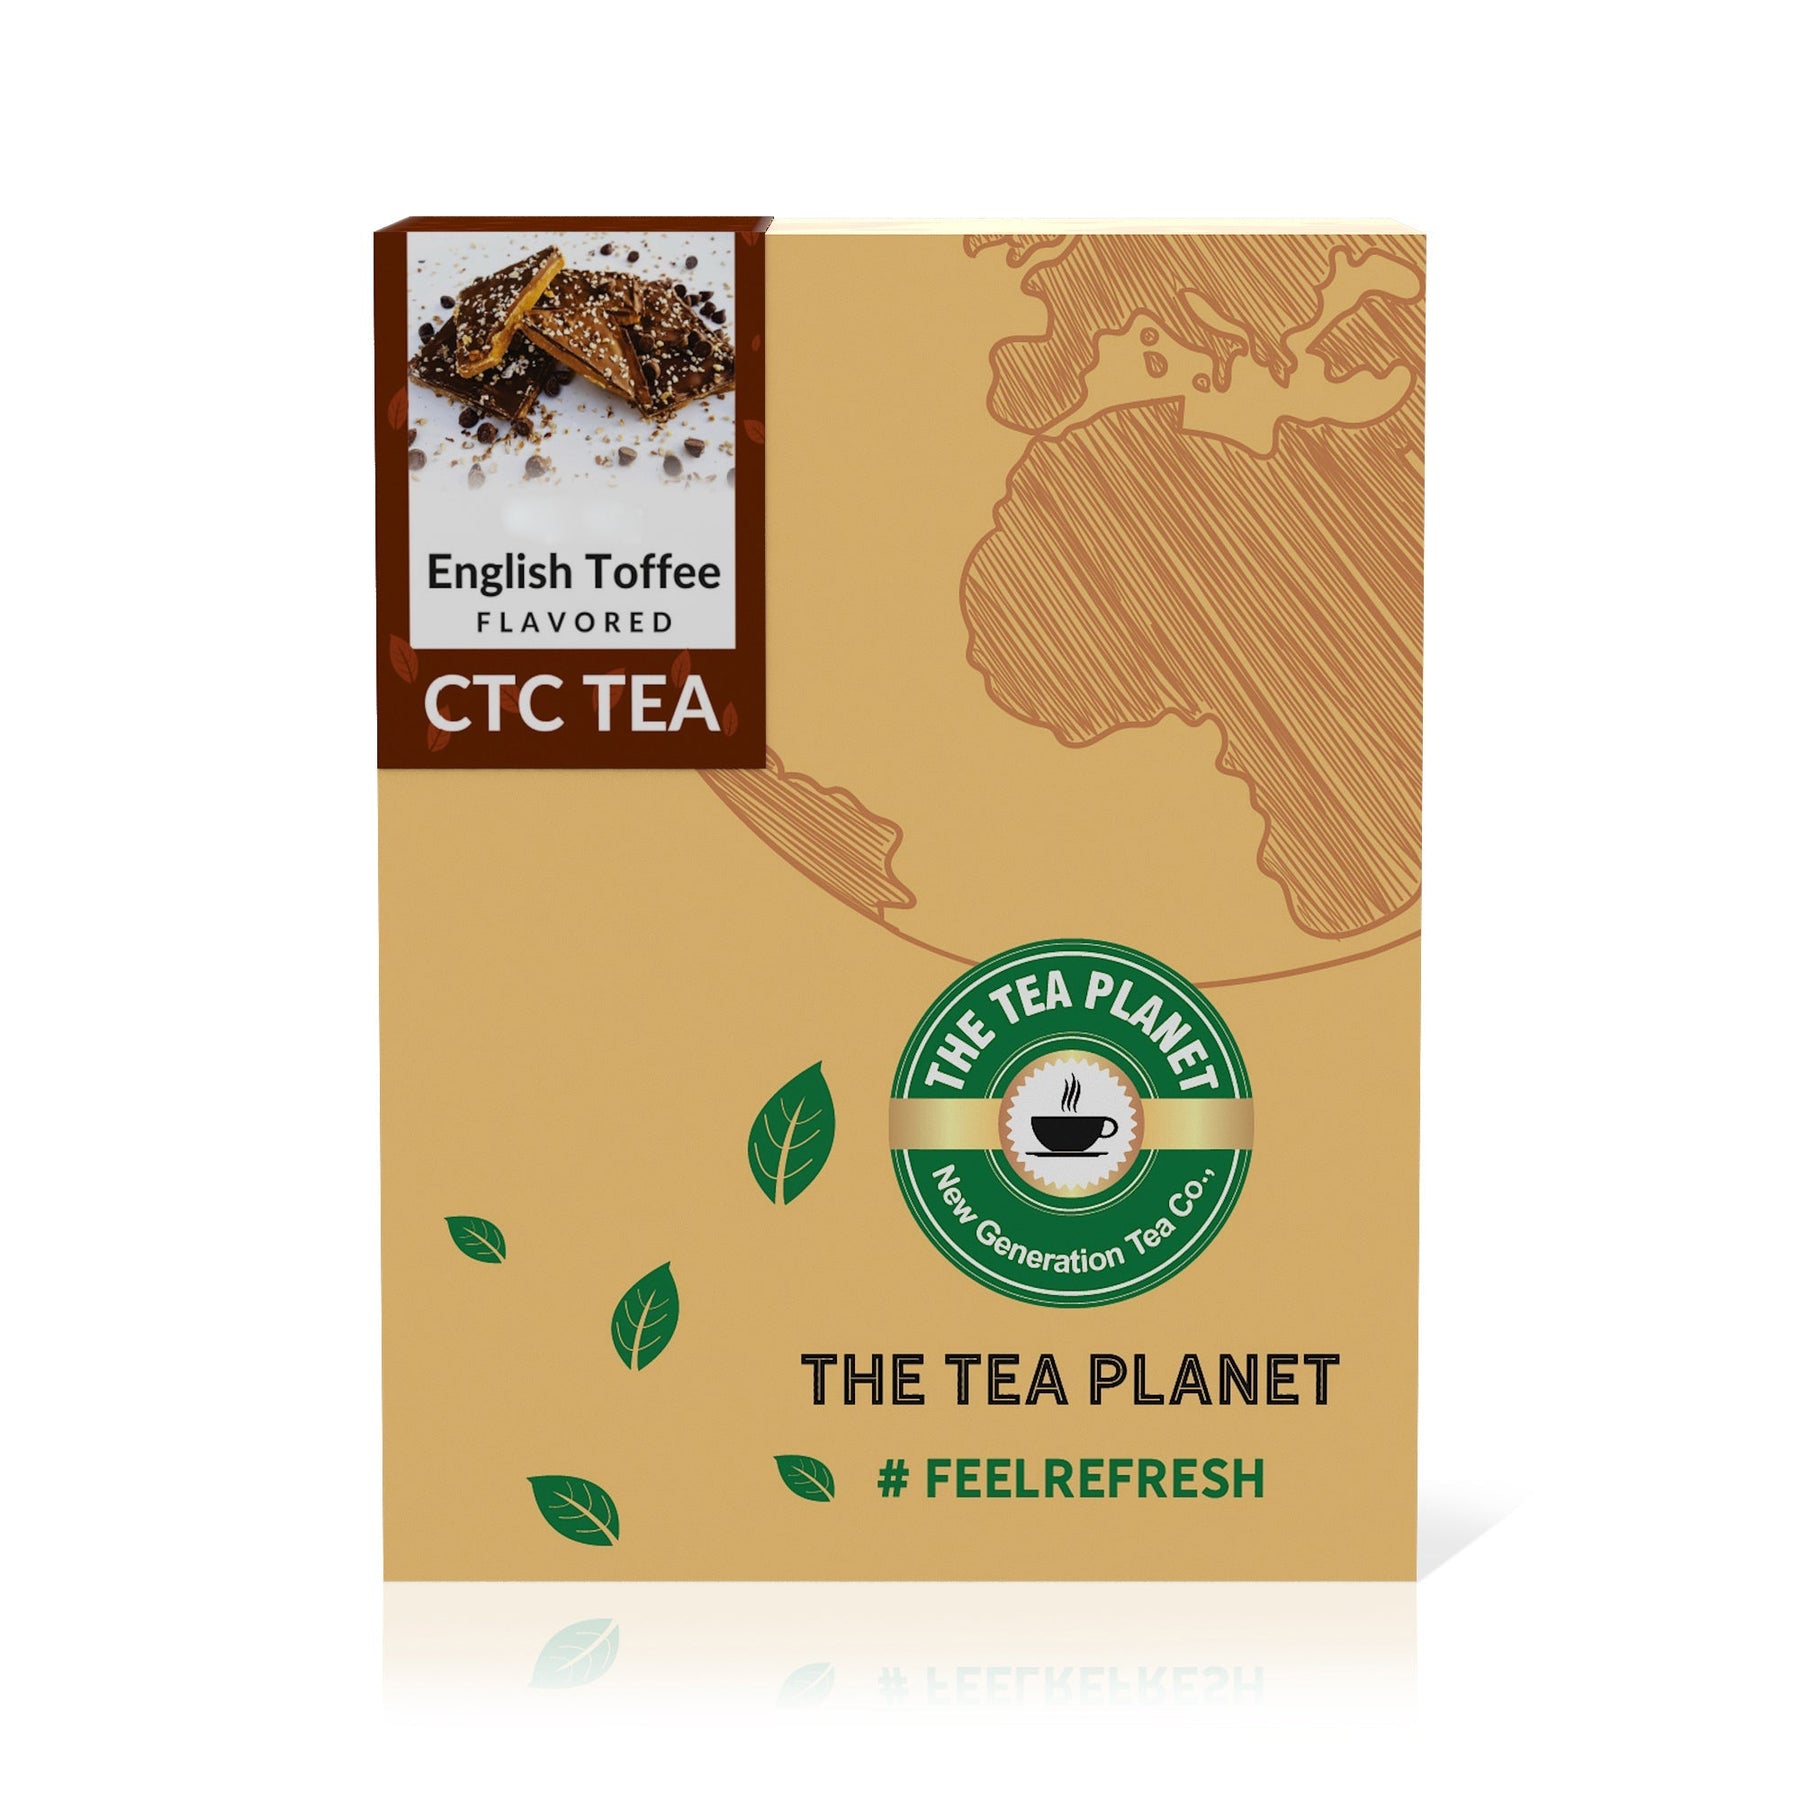 English Toffee Flavored CTC Tea 1